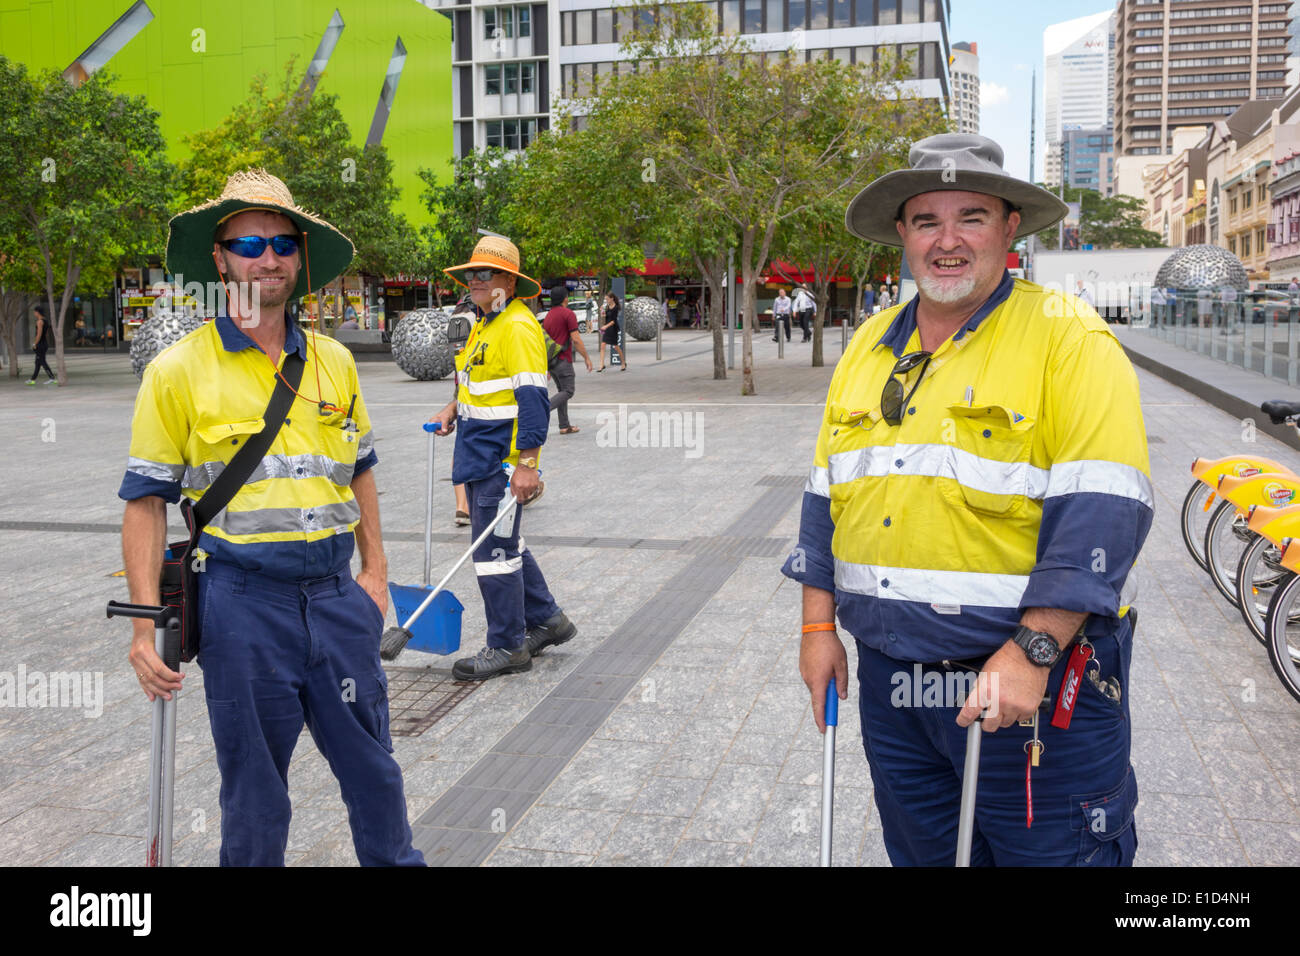 Brisbane Australia,Brisbane Square,city workers,man men male,employee worker workers working staff,street cleaners,uniform,AU140313066 Stock Photo